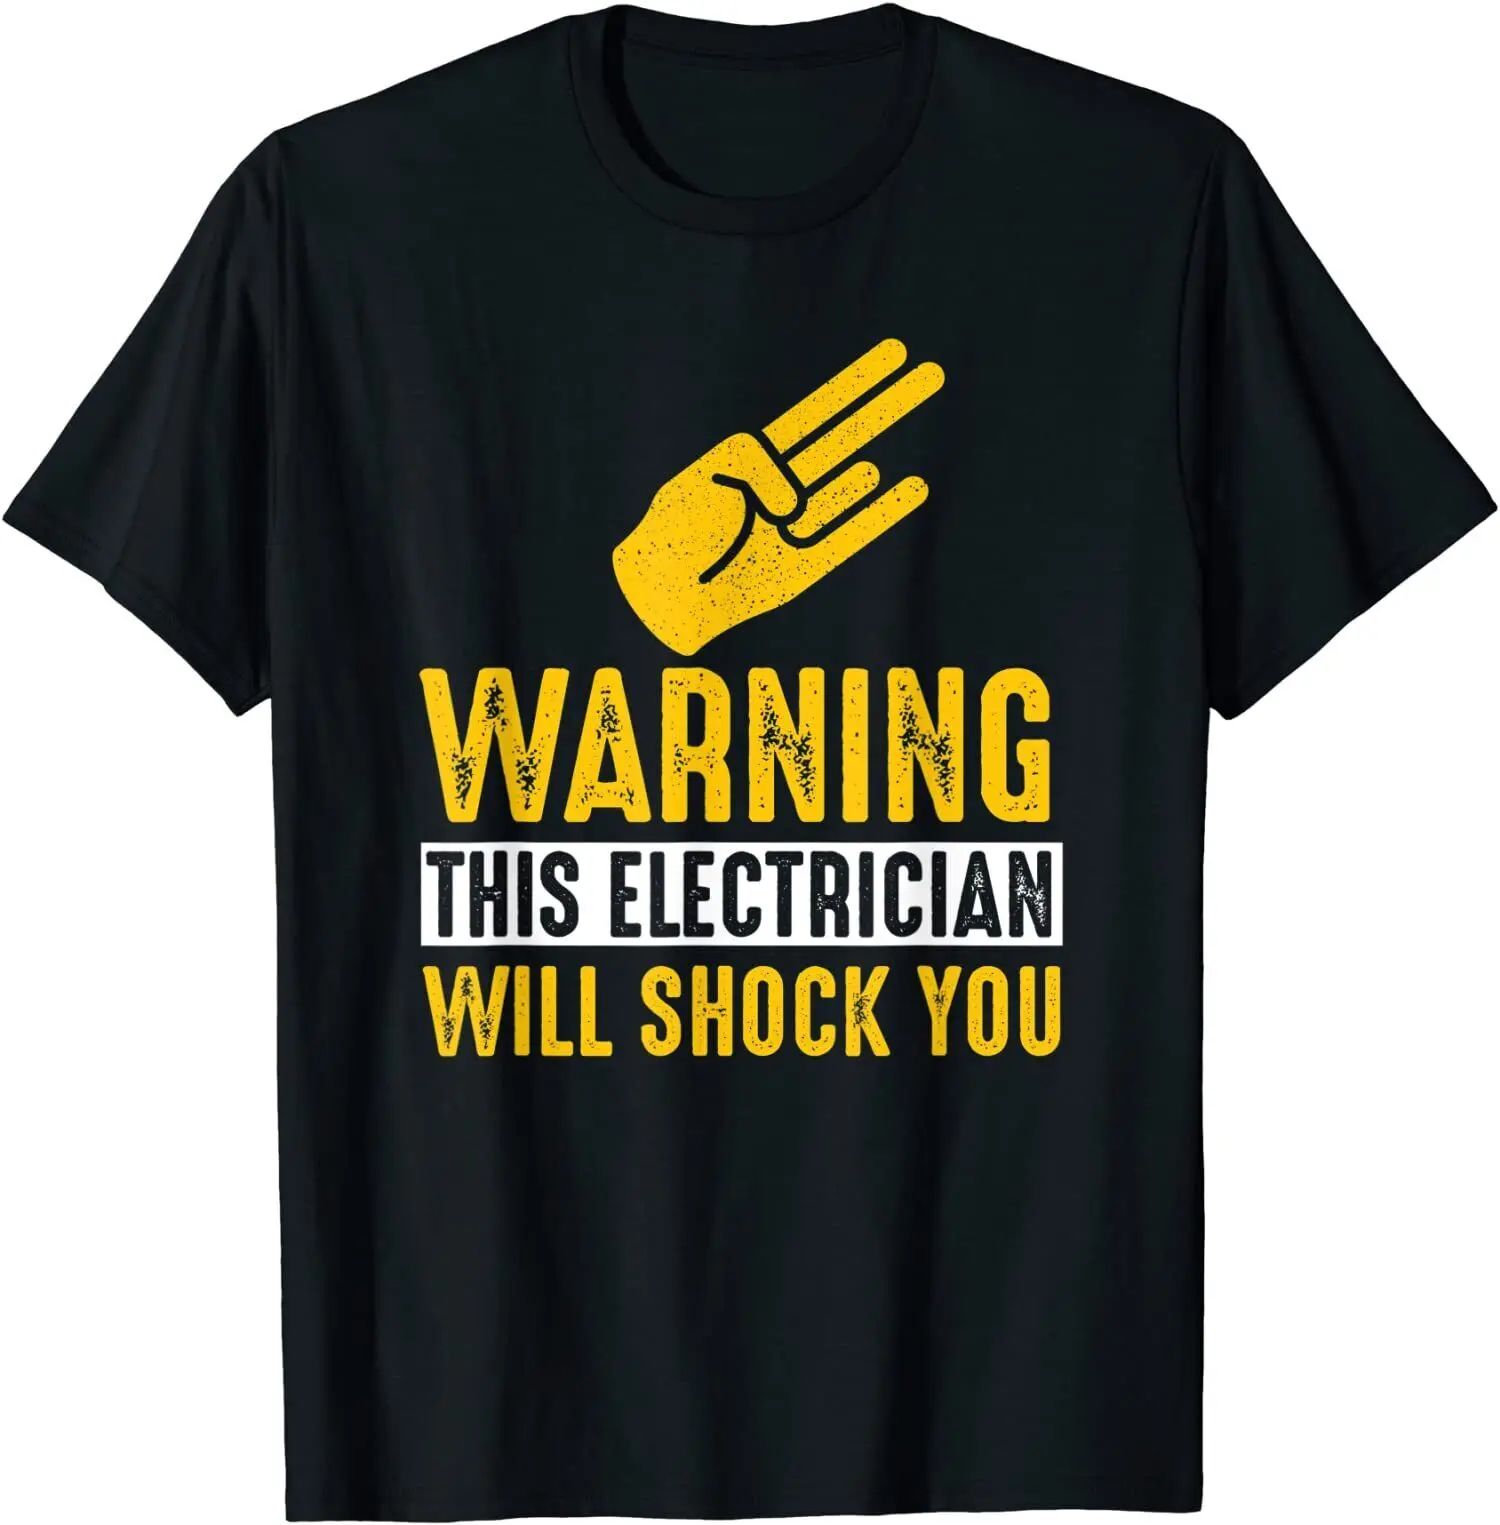 Warning Electrician Will Shock You Funny O-Neck Cotton T Shirt Men Casual Short Sleeve Tees Tops Harajuku